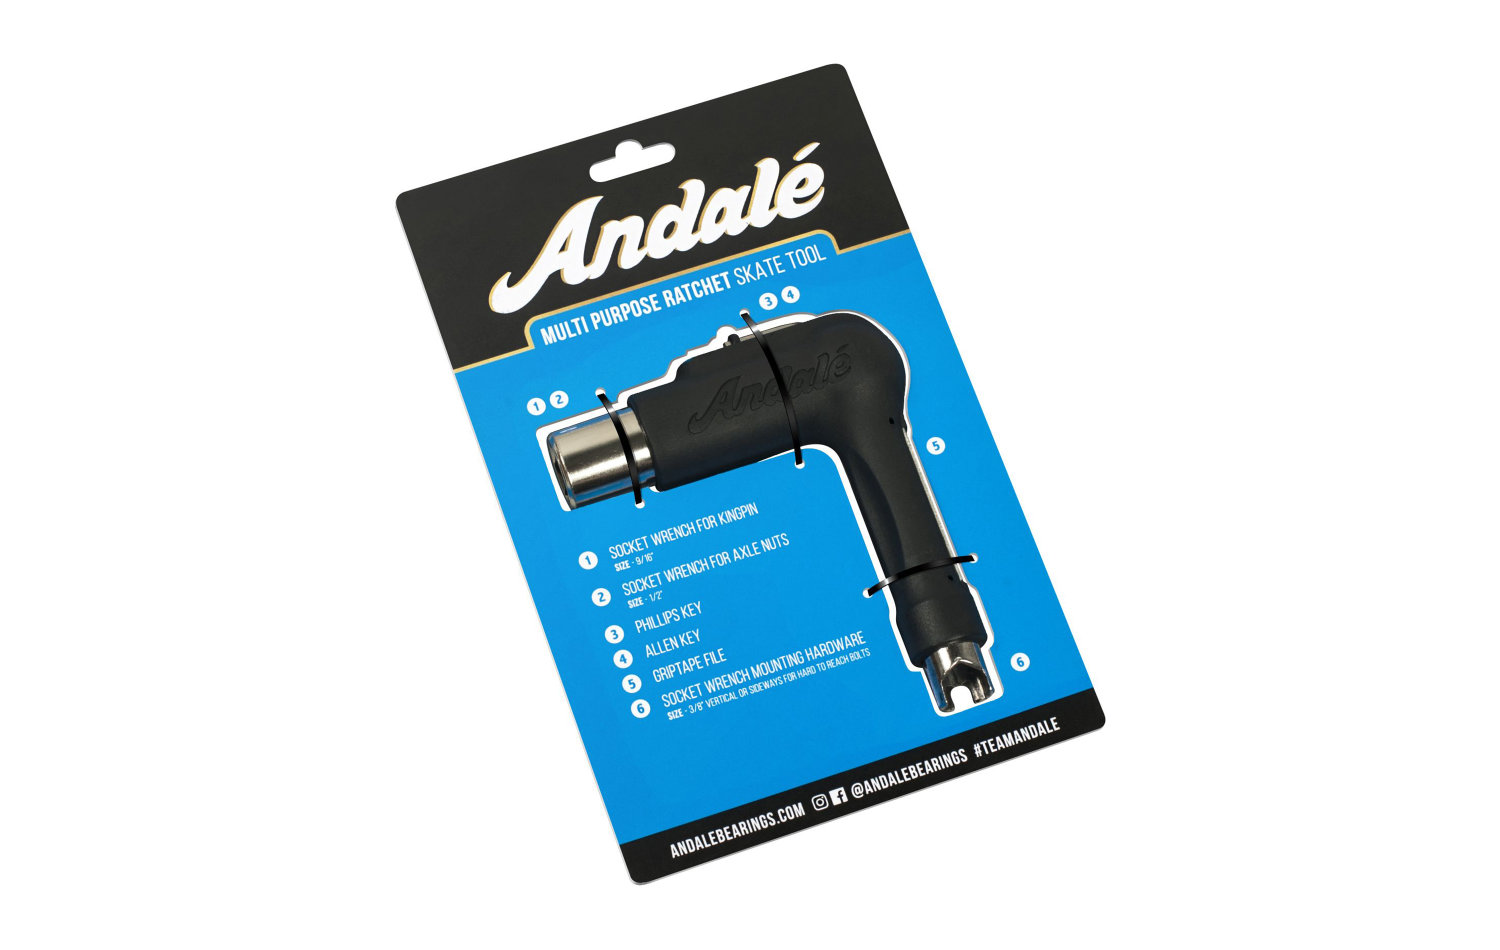 Andalé Multi Purpose Ratchet Skate Tool (13246003-BLK)